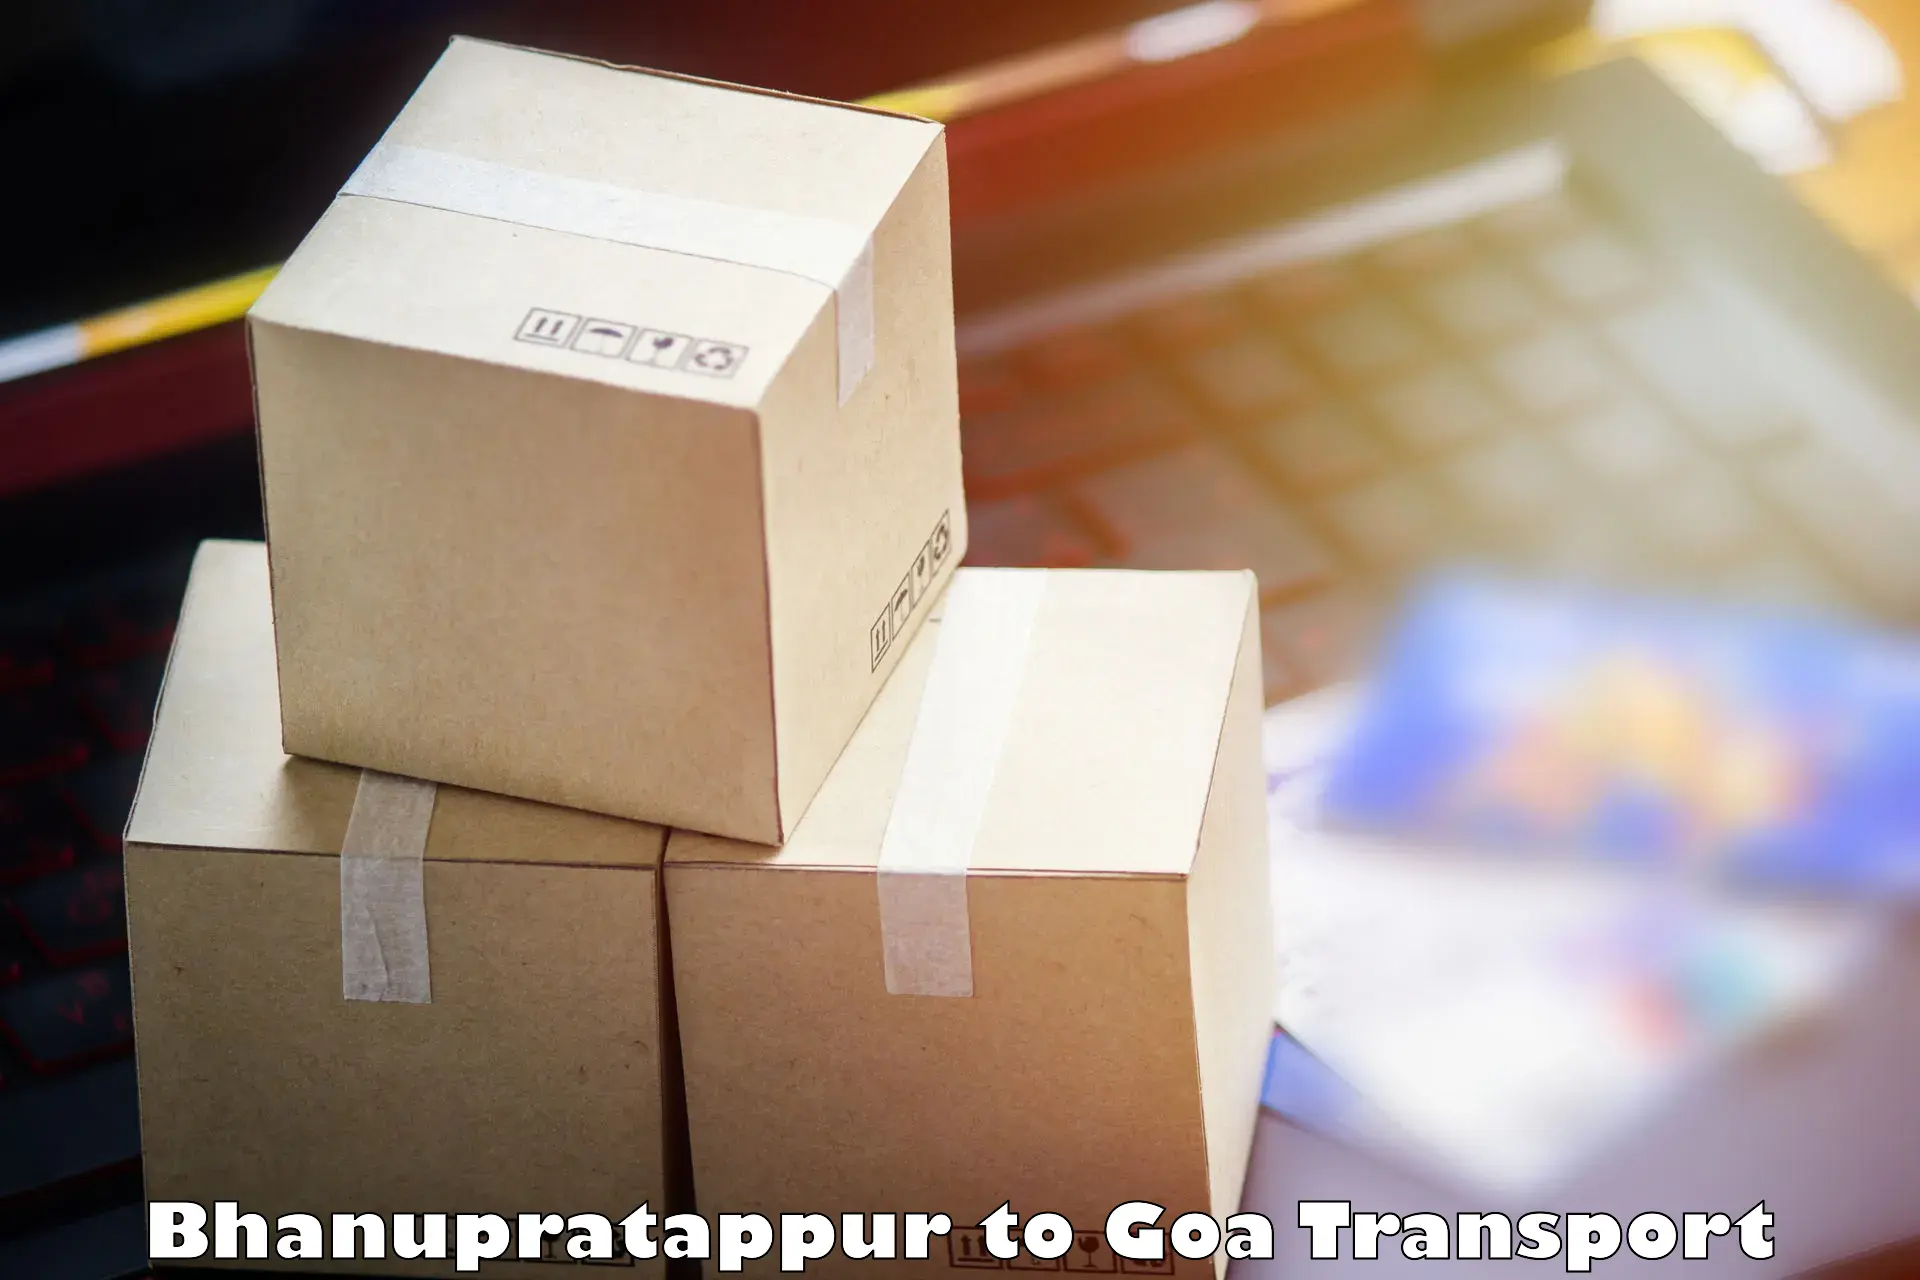 Container transport service Bhanupratappur to Goa